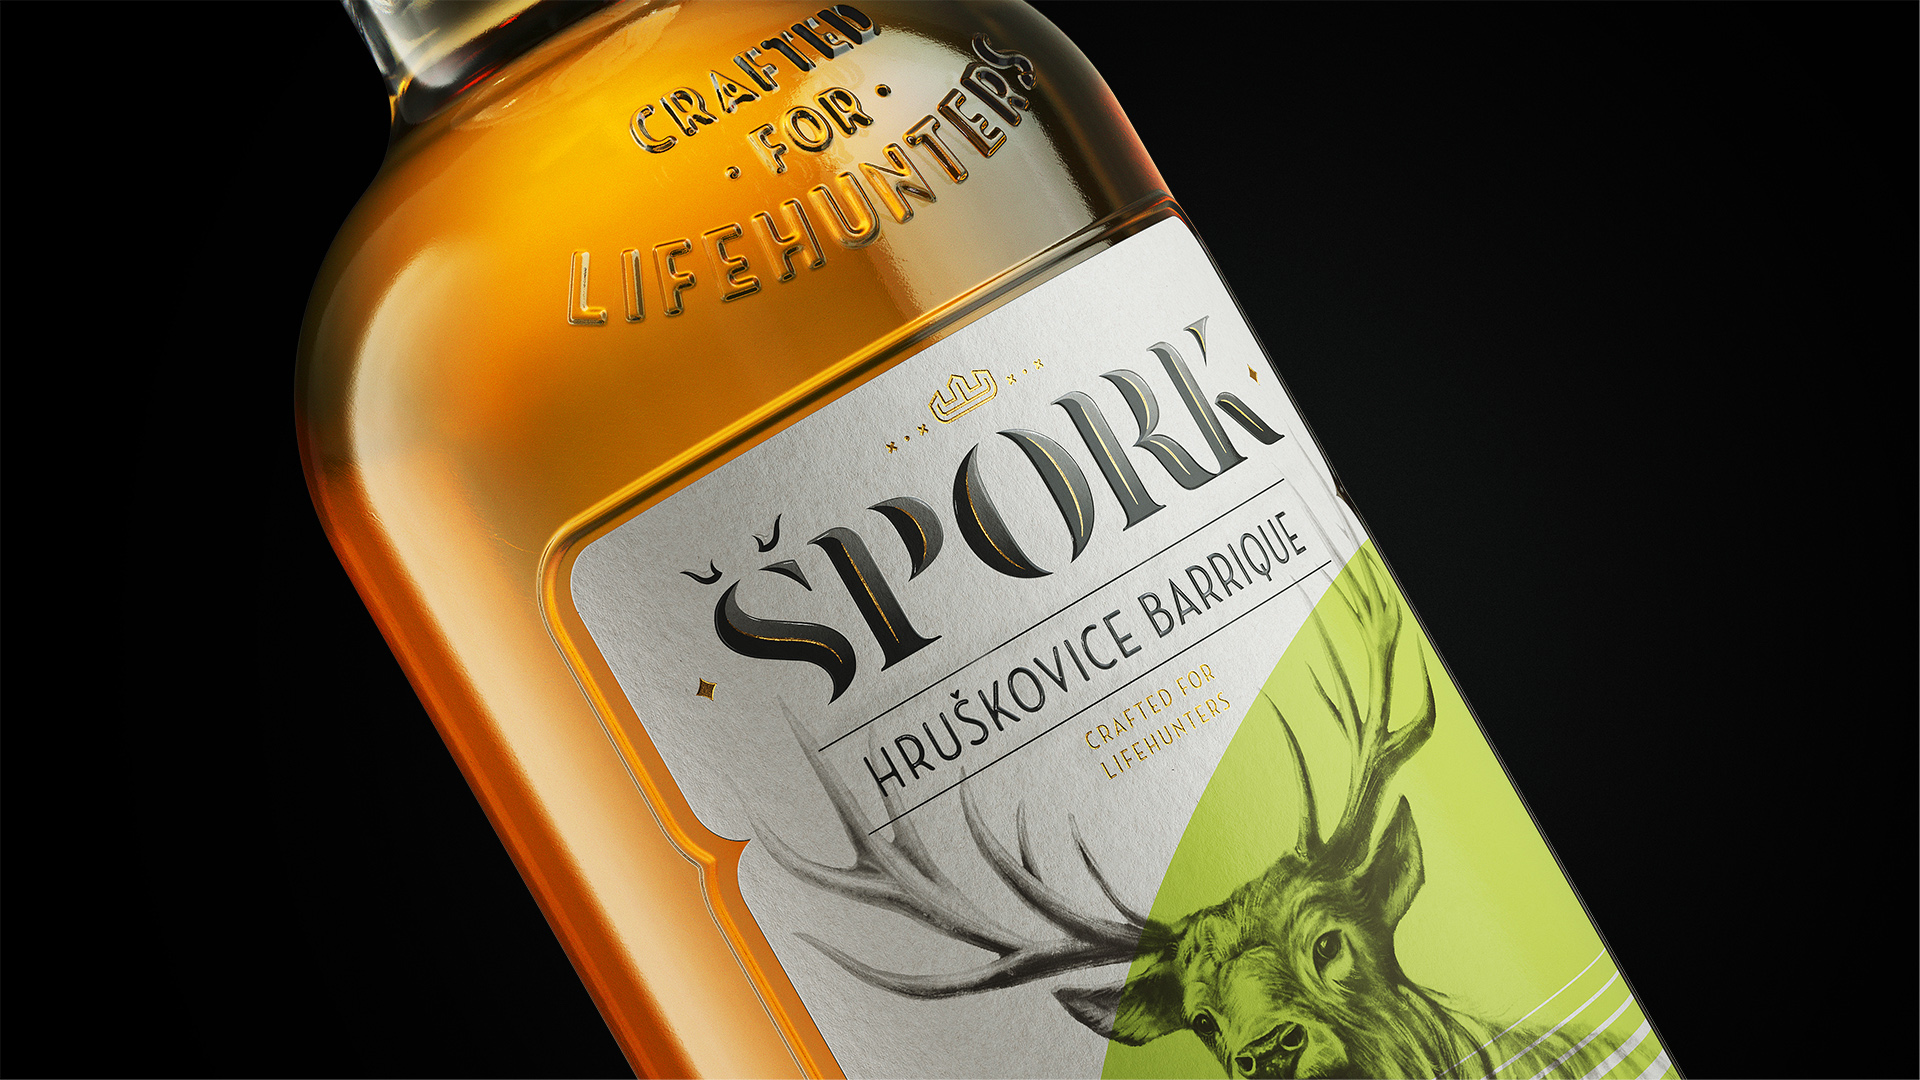 Amoth Studio Create Label Design for Špork Crafted Spirits Line